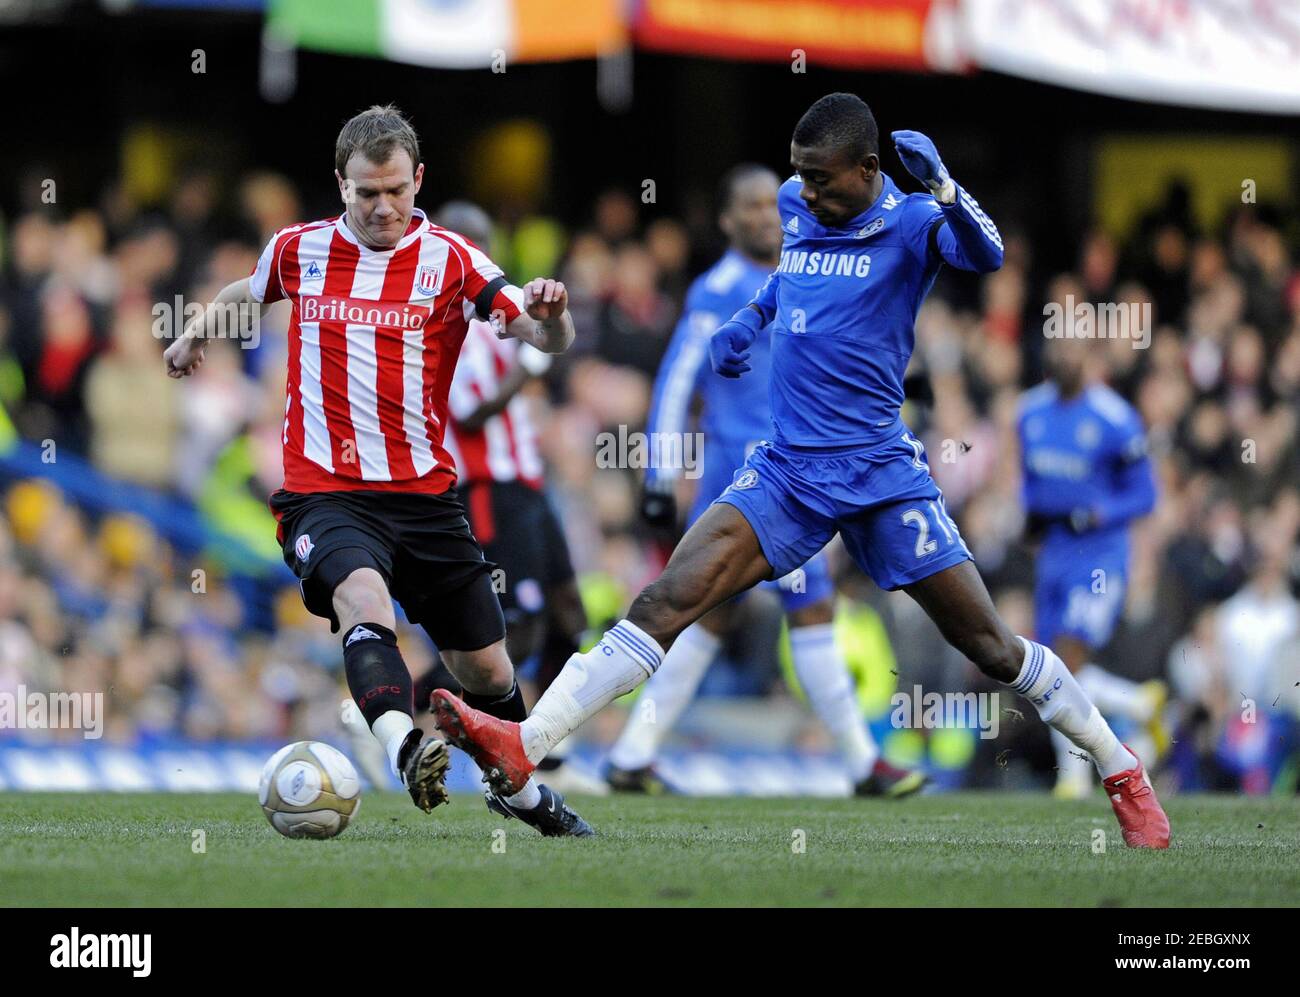 Football - Chelsea v Stoke City - FA Cup Quarter Final - Stamford Bridge -  09/10 - 7/3/10